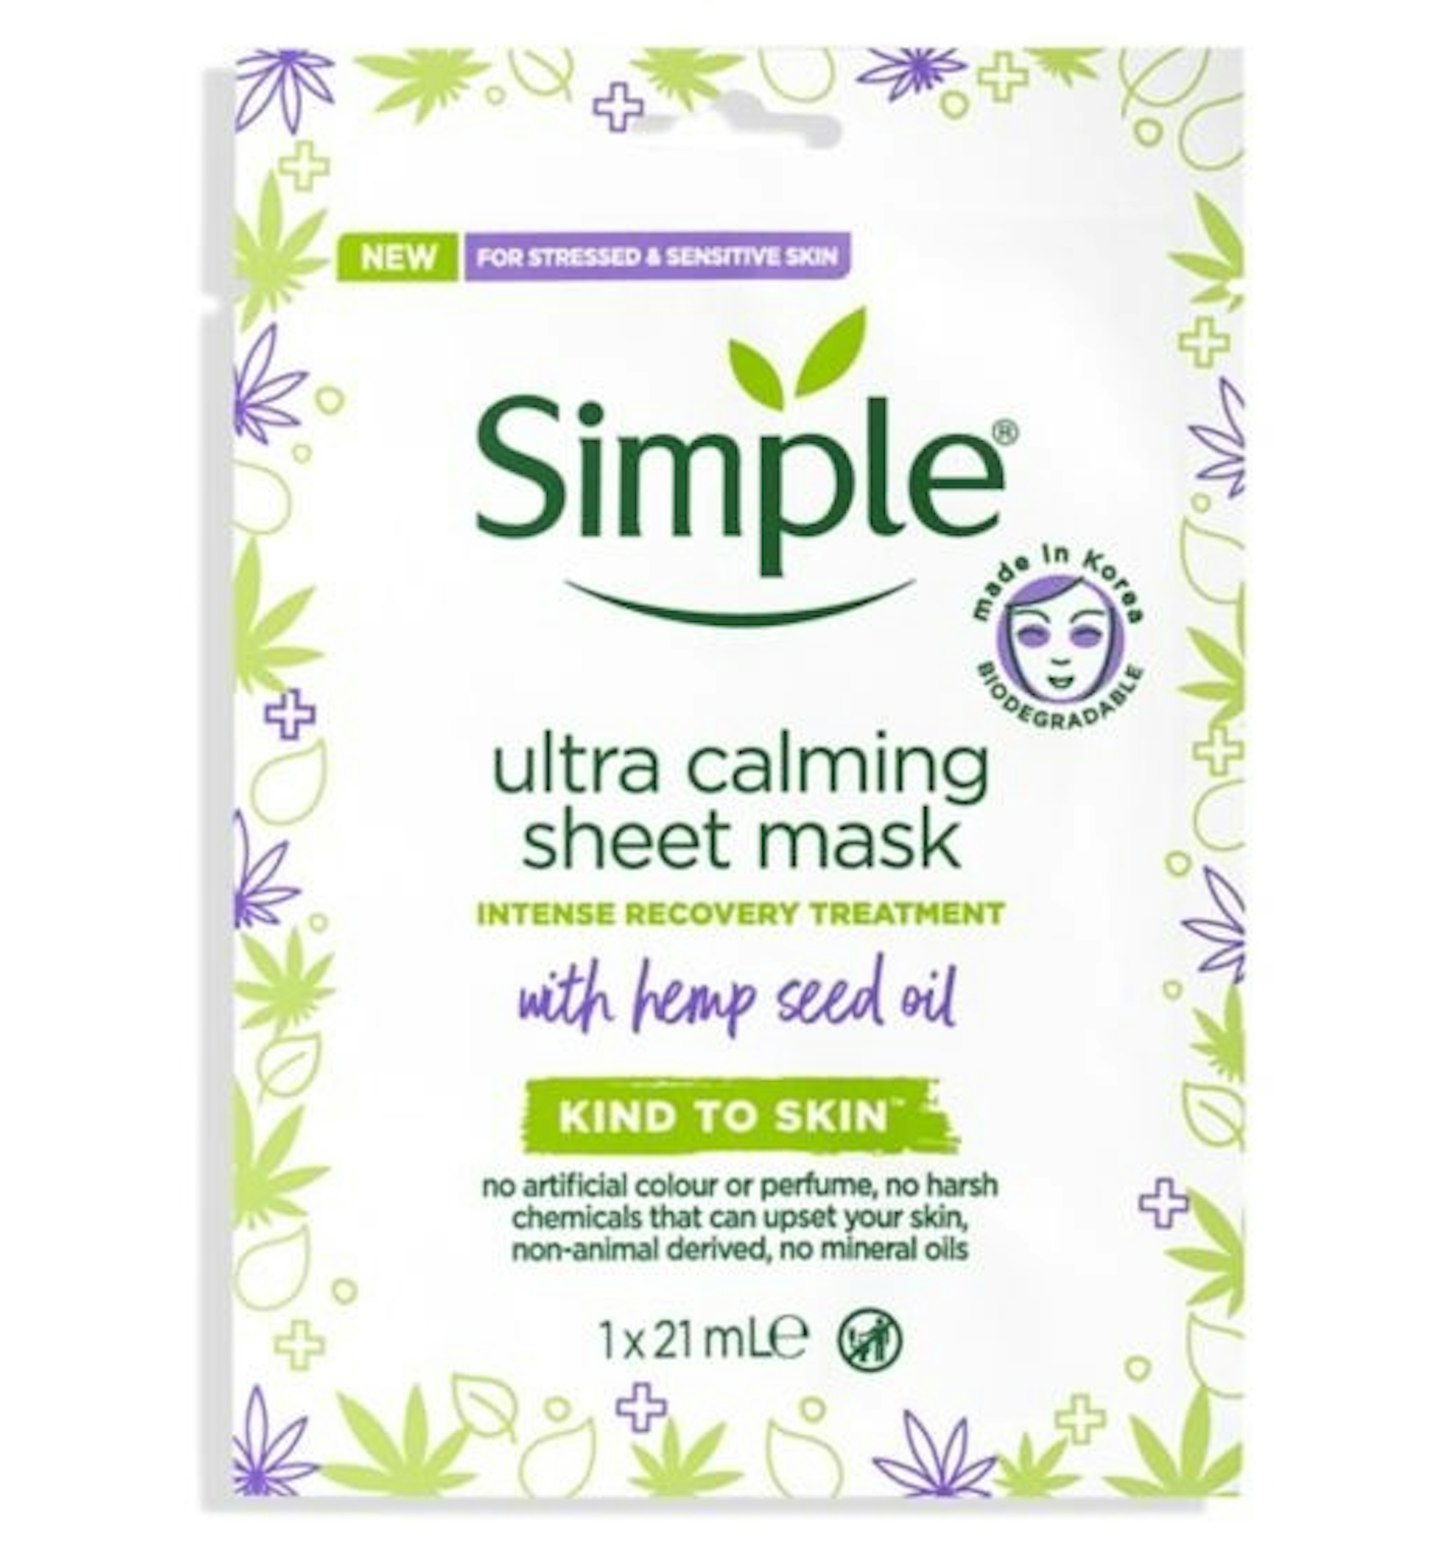 Simple Hemp Ultra Calming Sheet Mask, £2.99